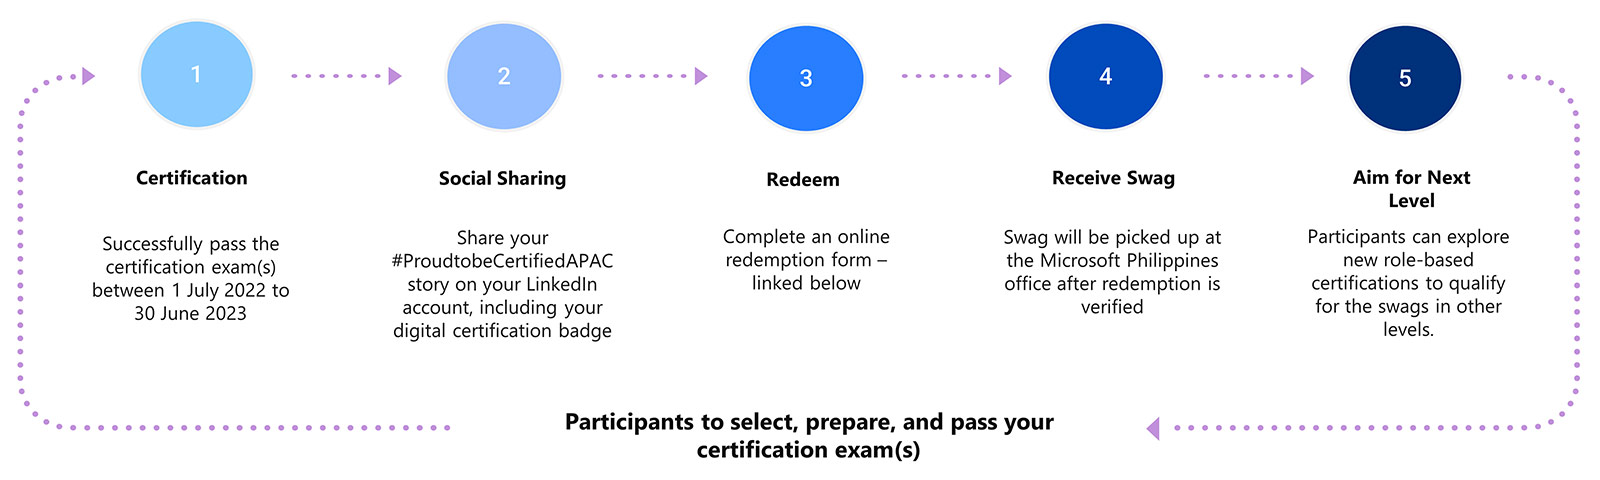 ProudtobeCertifiedAPAC Campaign Process image